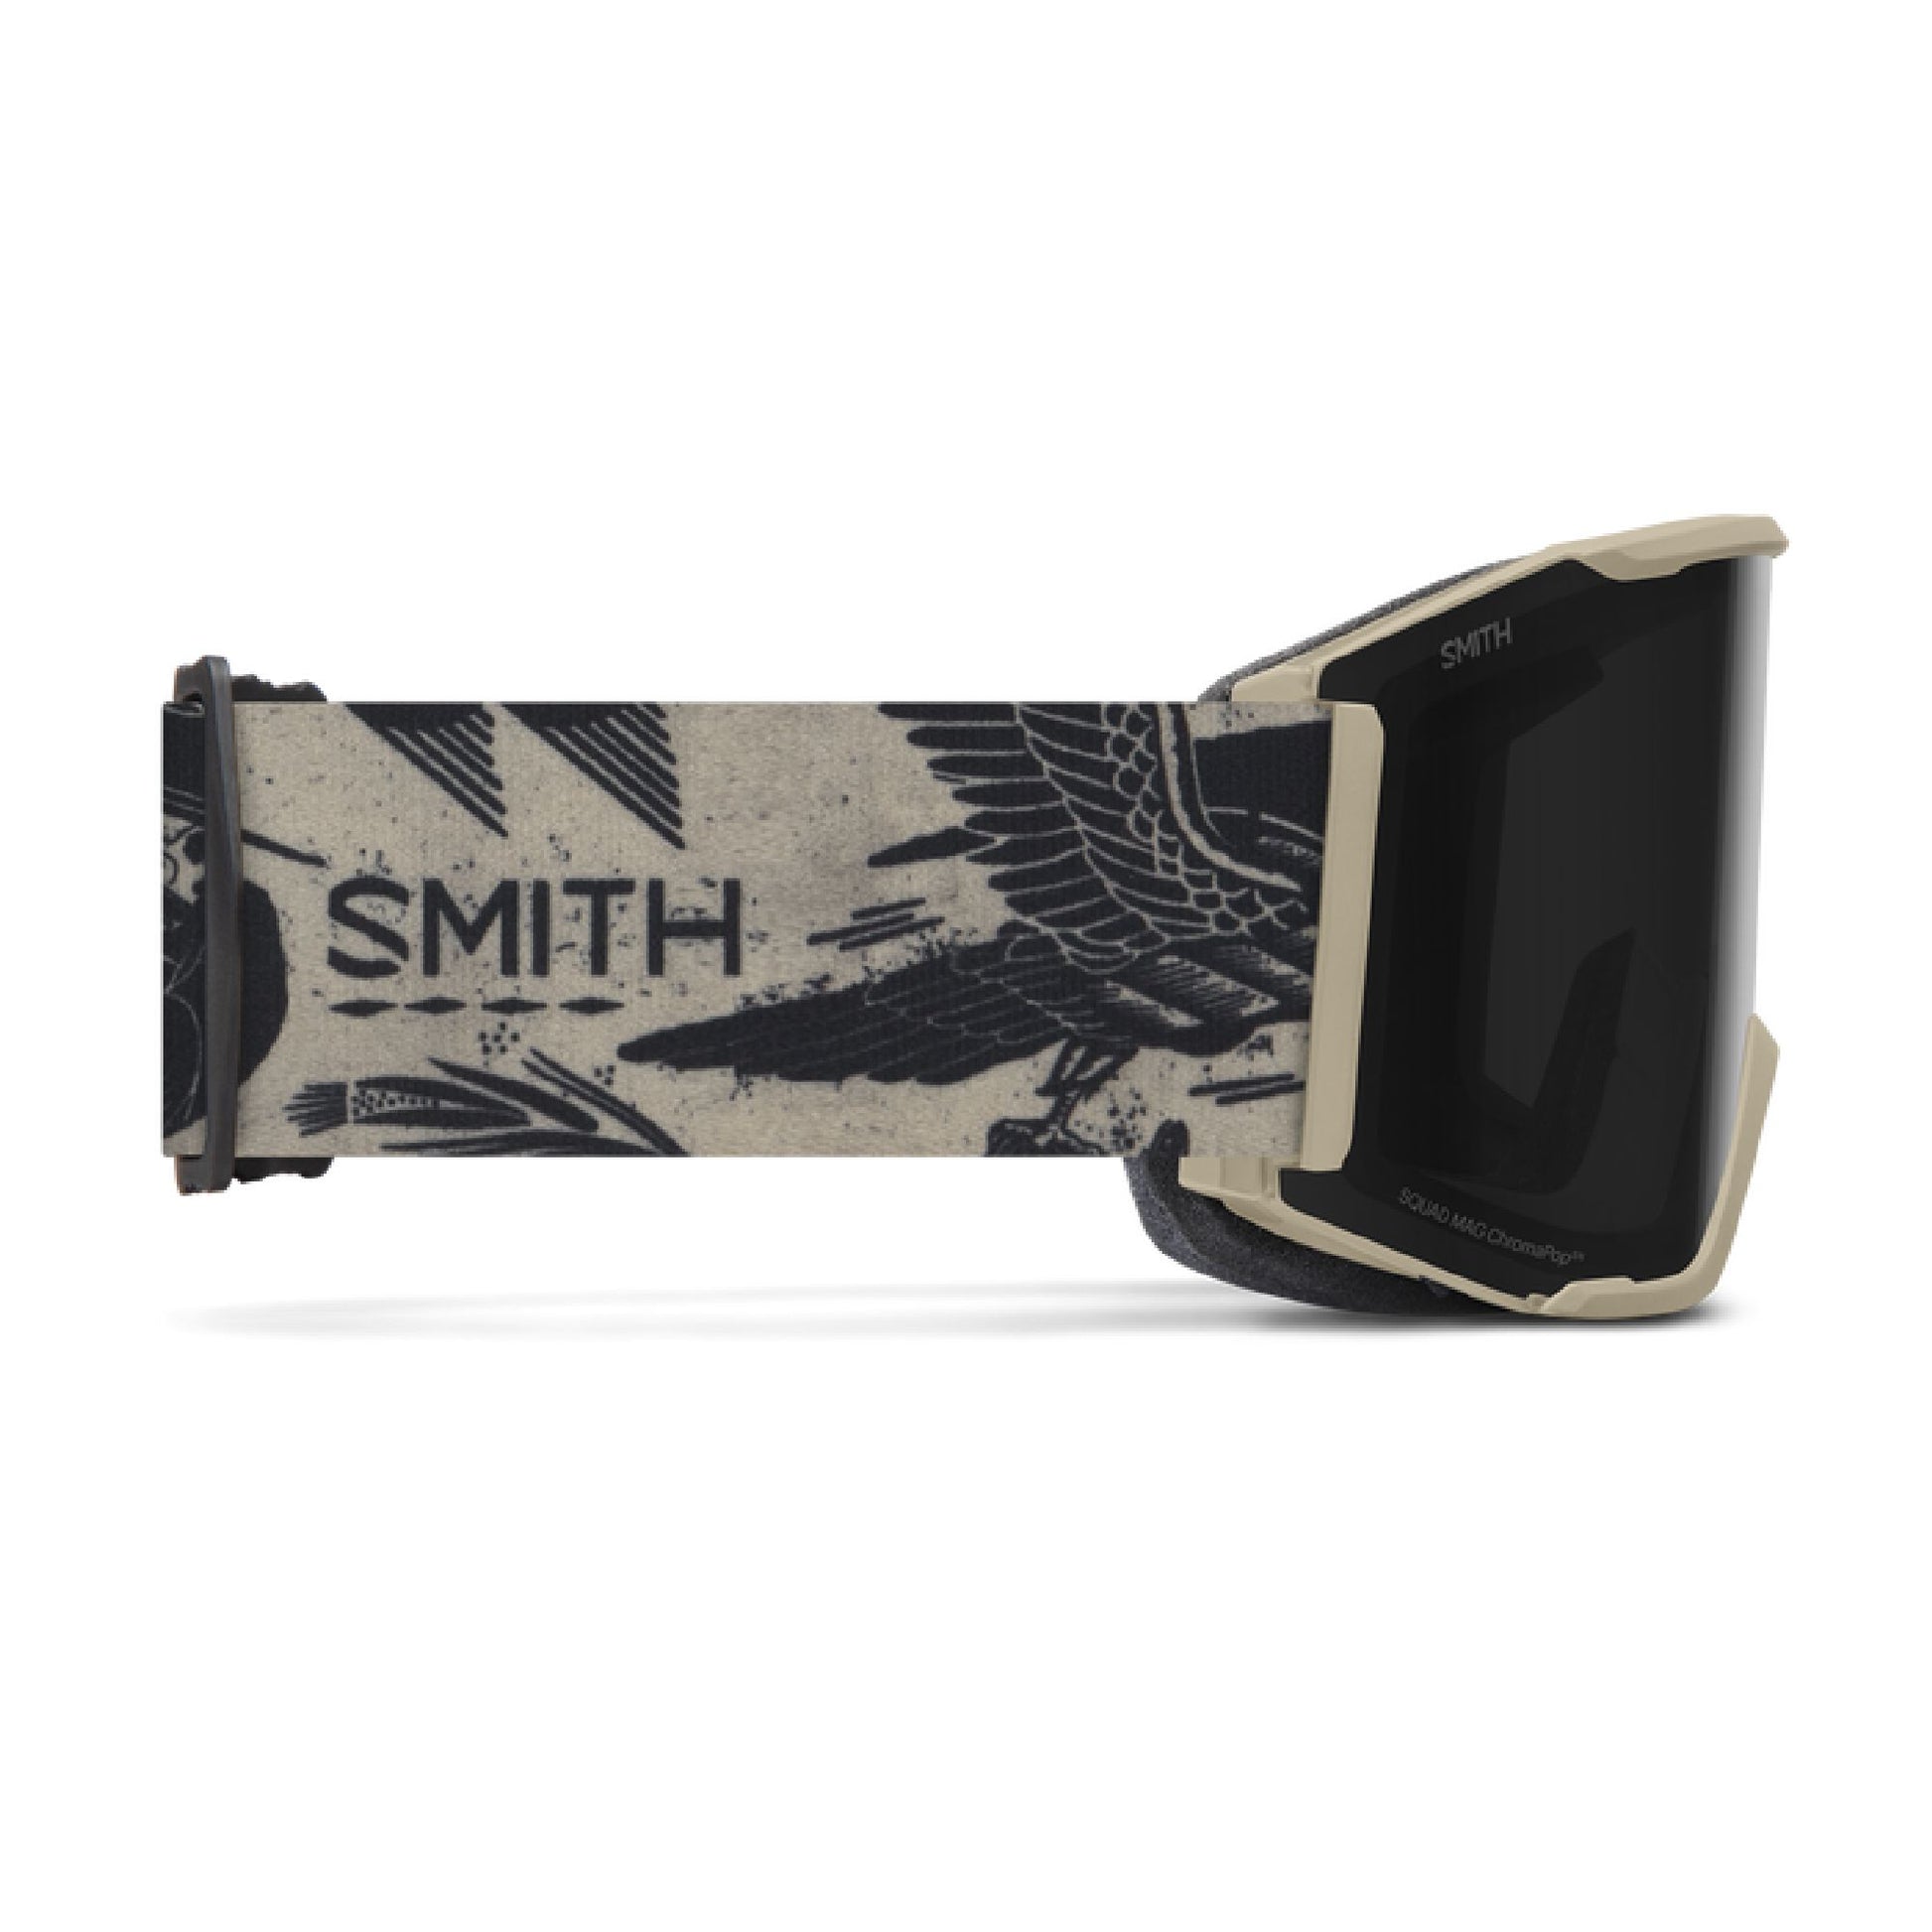 Smith Squad MAG Low Bridge Fit Snow Goggle Artist Series | Jess Mudget / ChromaPop Sun Black Snow Goggles